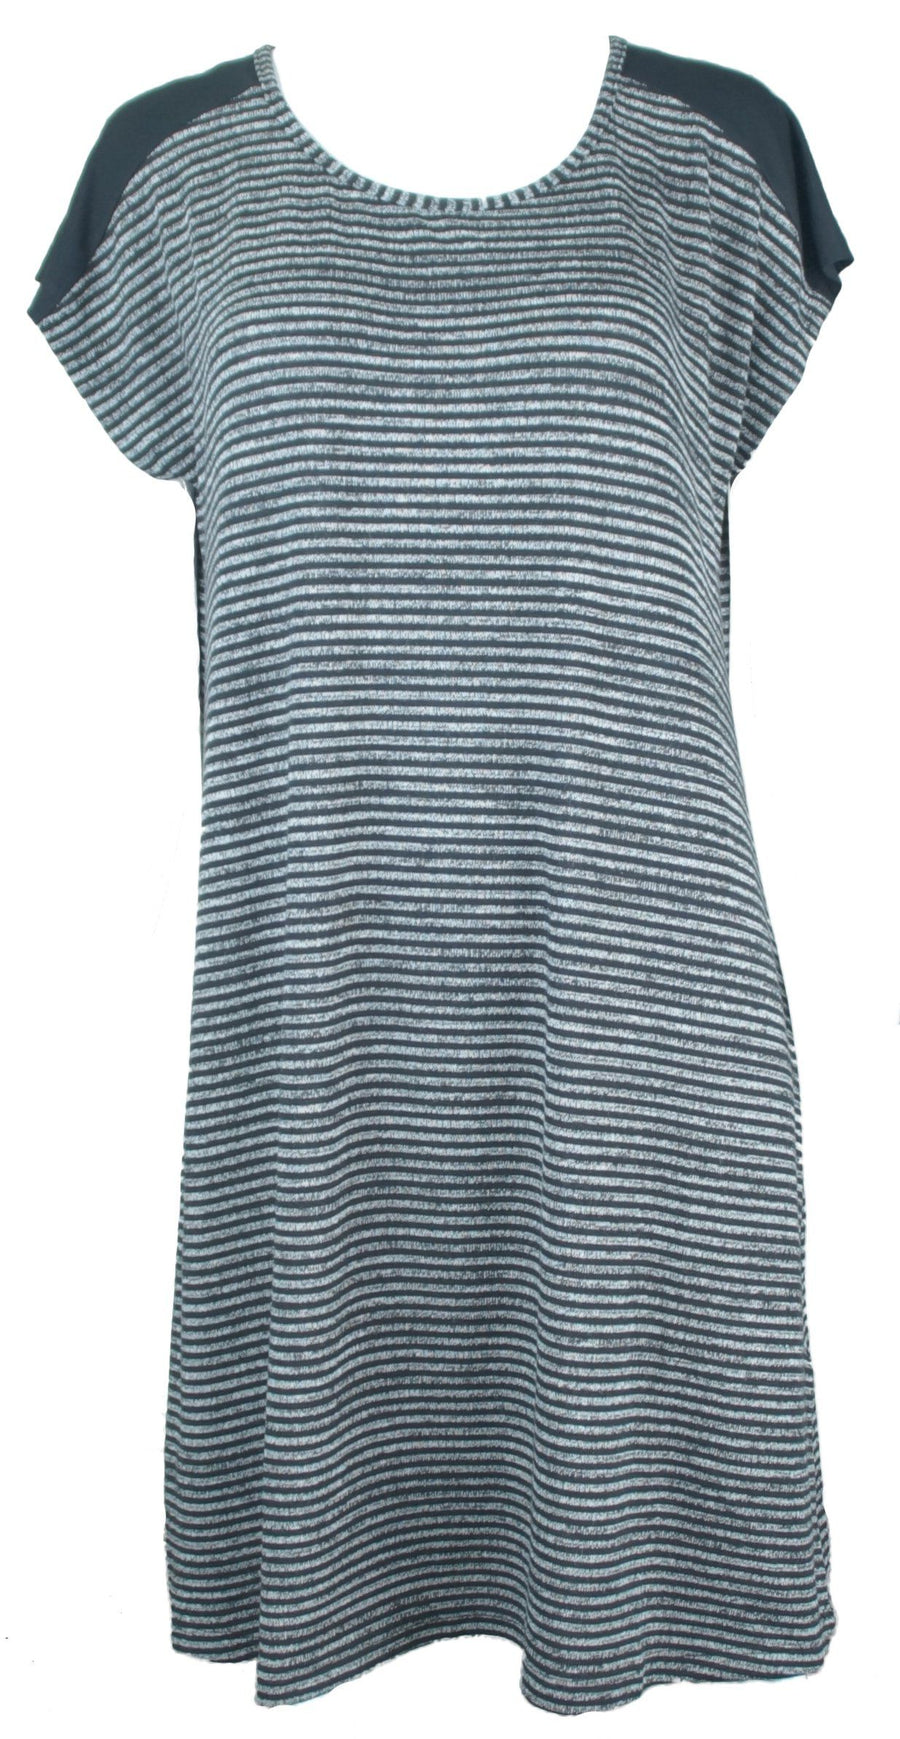 Stripe t-shirt dress